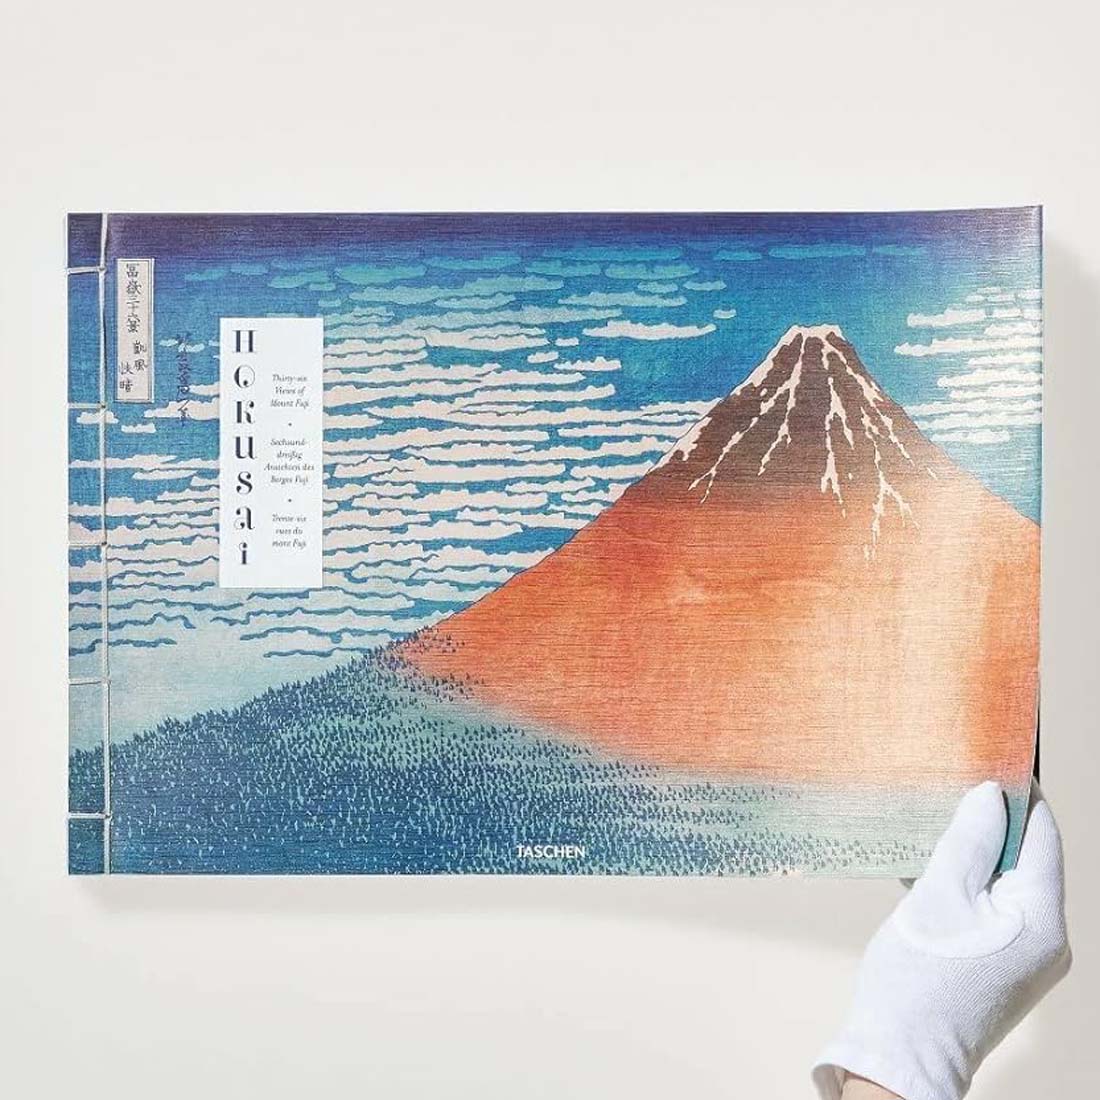 Hokusai: Thirty-Six Views of Mount Fuji (XXL Edition)